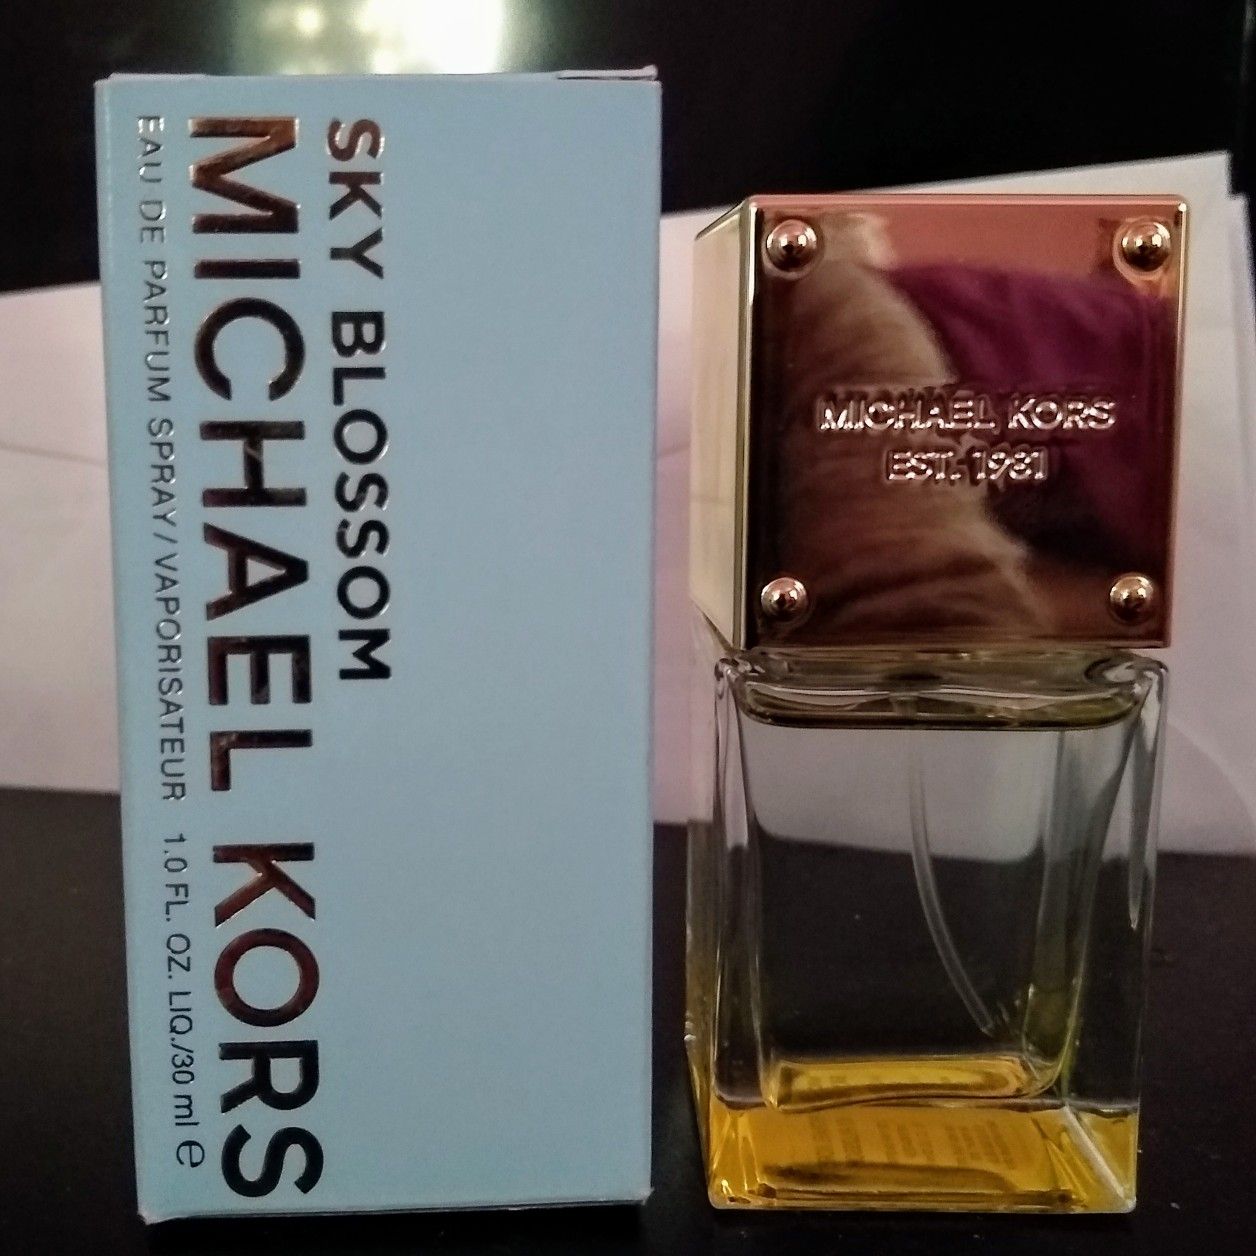 Michael Kors sky blossom perfume